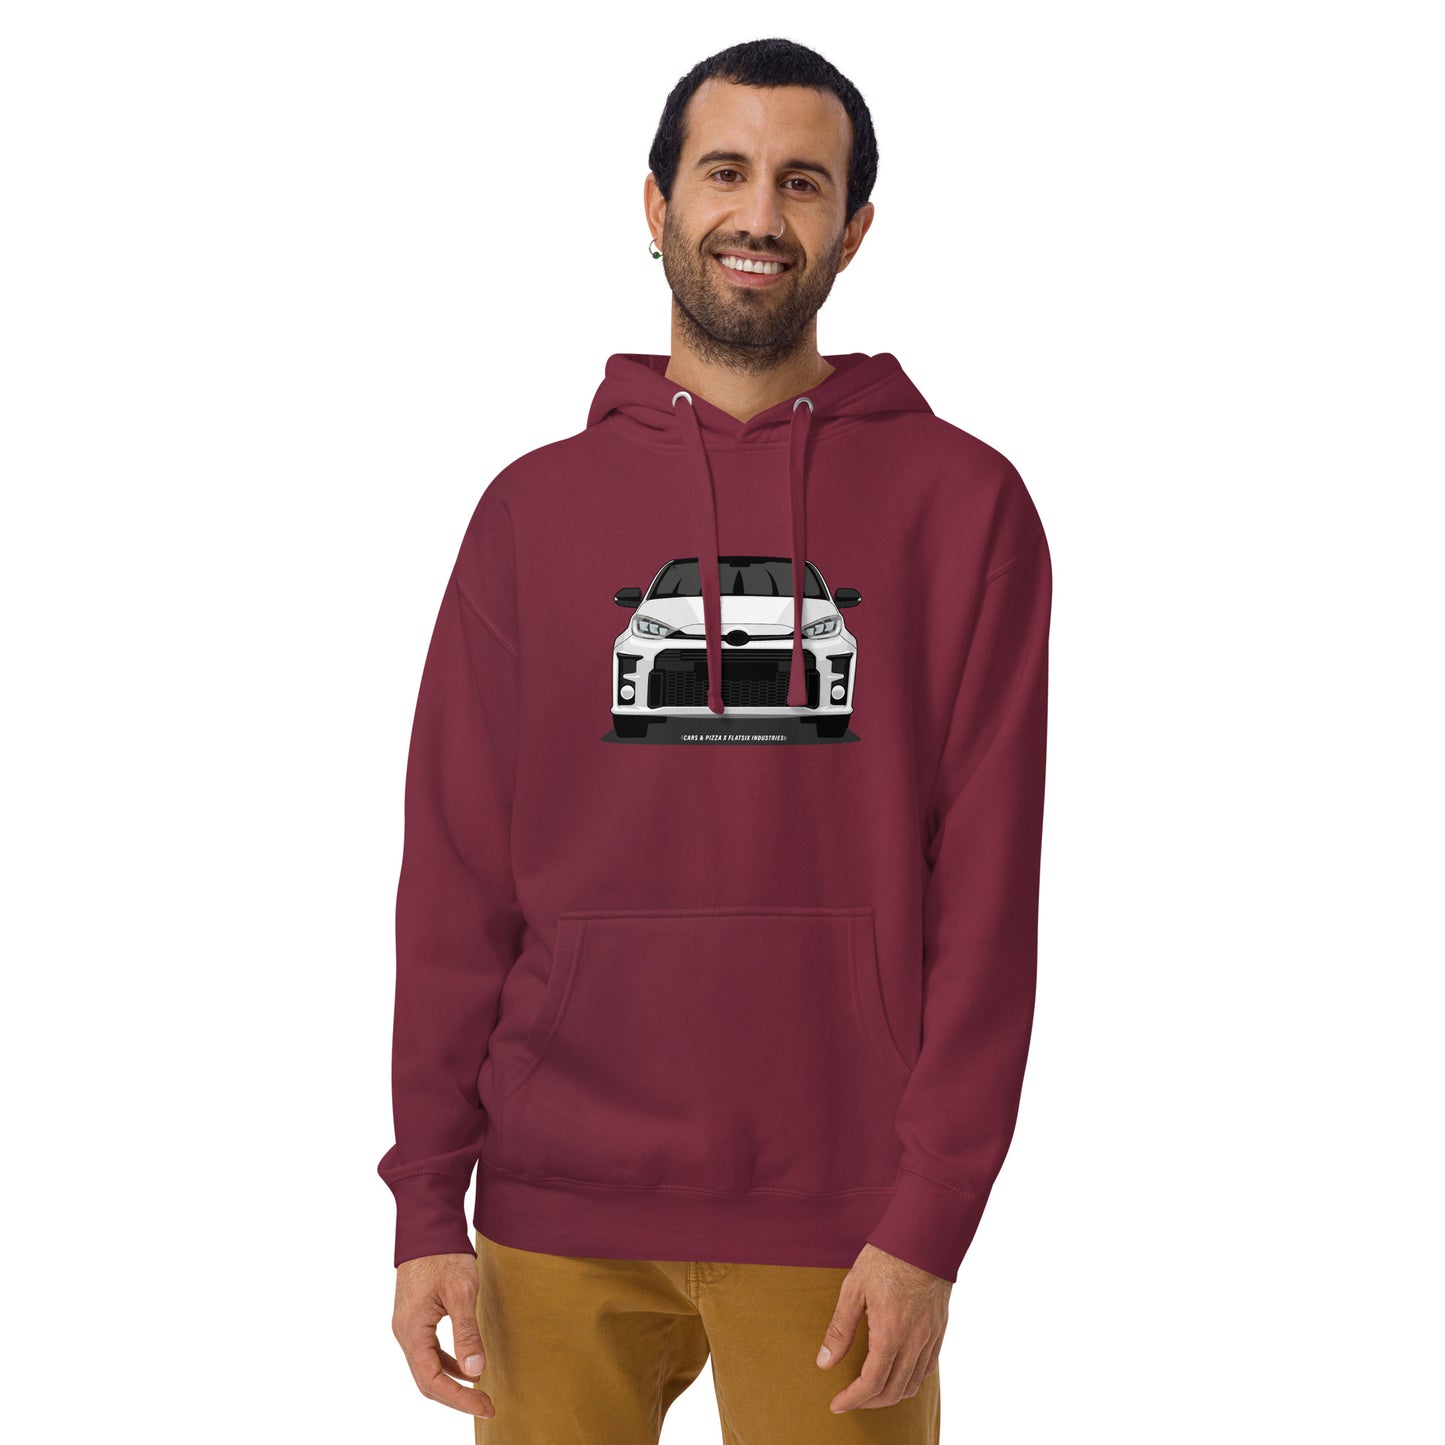 GR Yaris Unisex Hooded Sweatshirt "Garage Days" 1 of 100